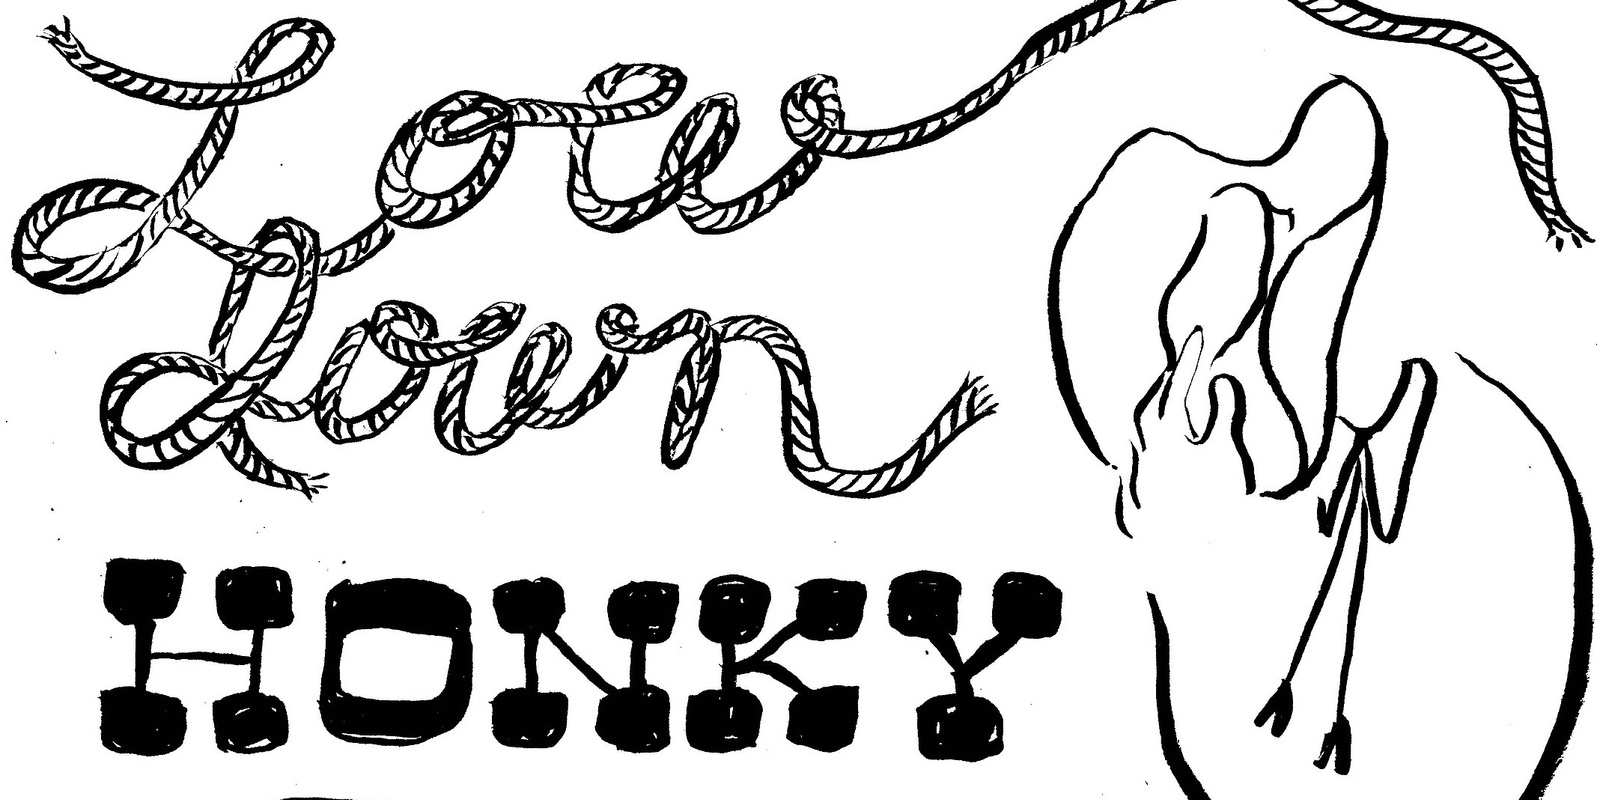 Banner image for Honky Tonk: The Return